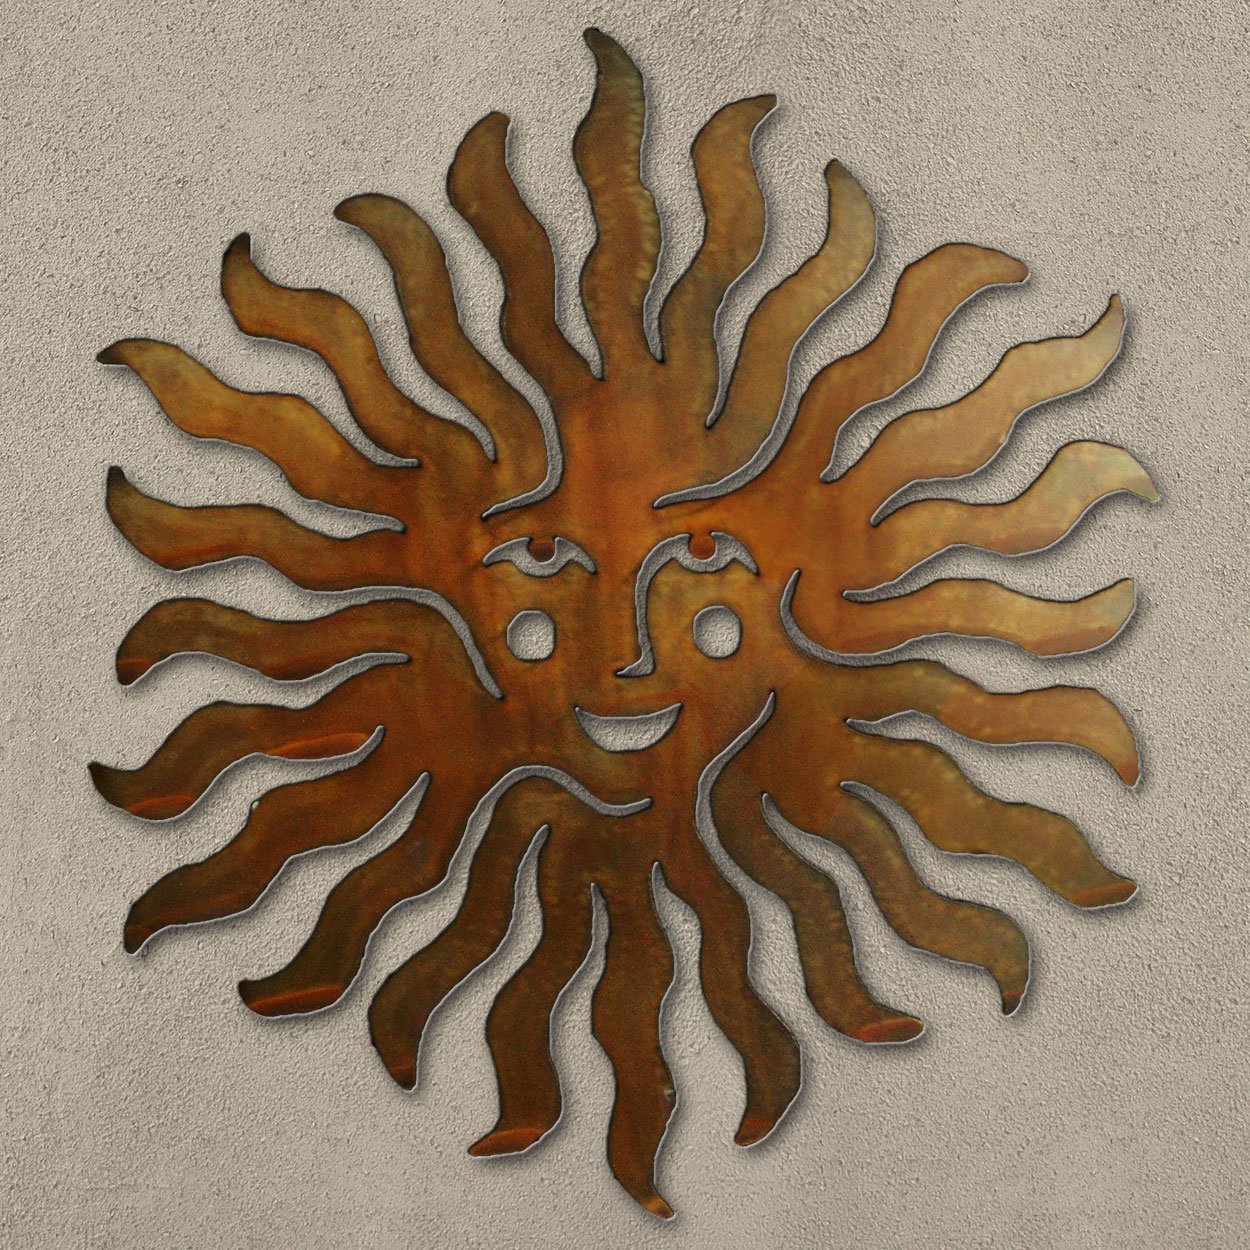 165233 - 24in Spritely Sun Face 3D Southwest Metal Wall Art in Rust Finish